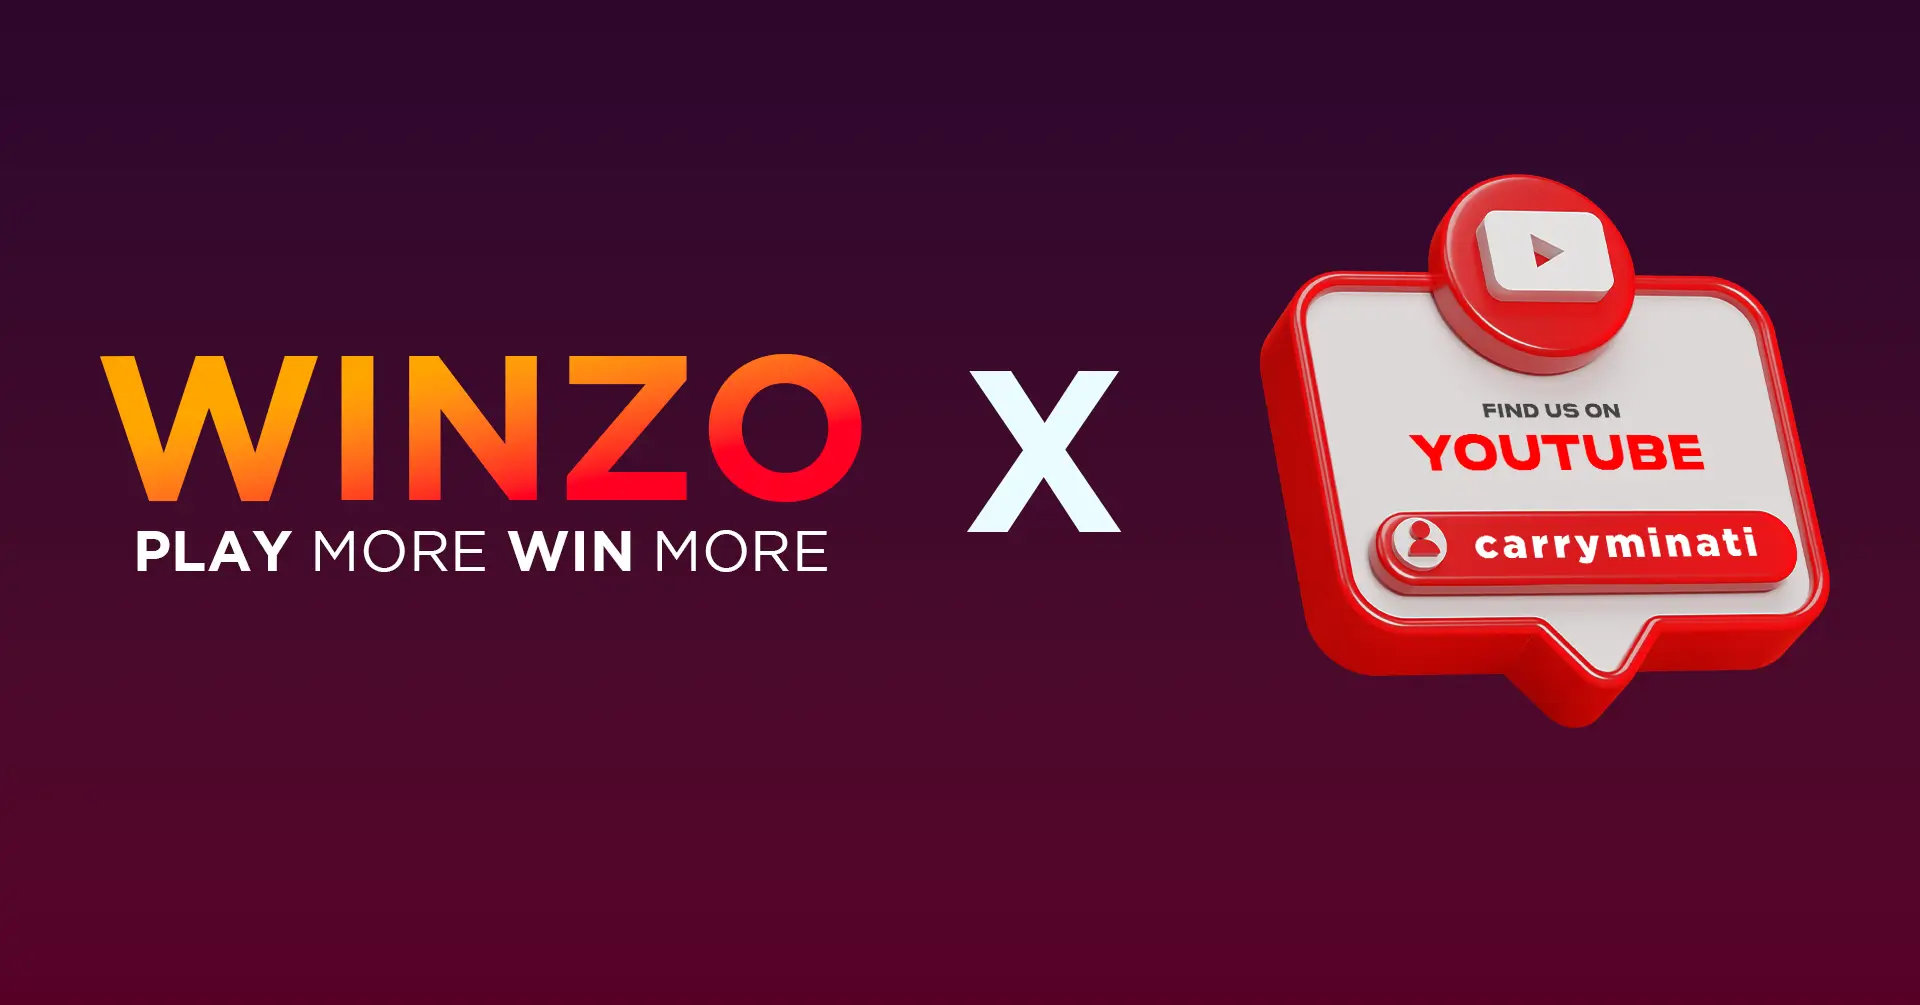 RajkotUpdates.News YouTuber CarryMinati Appointed as WinZO Brand Ambassador